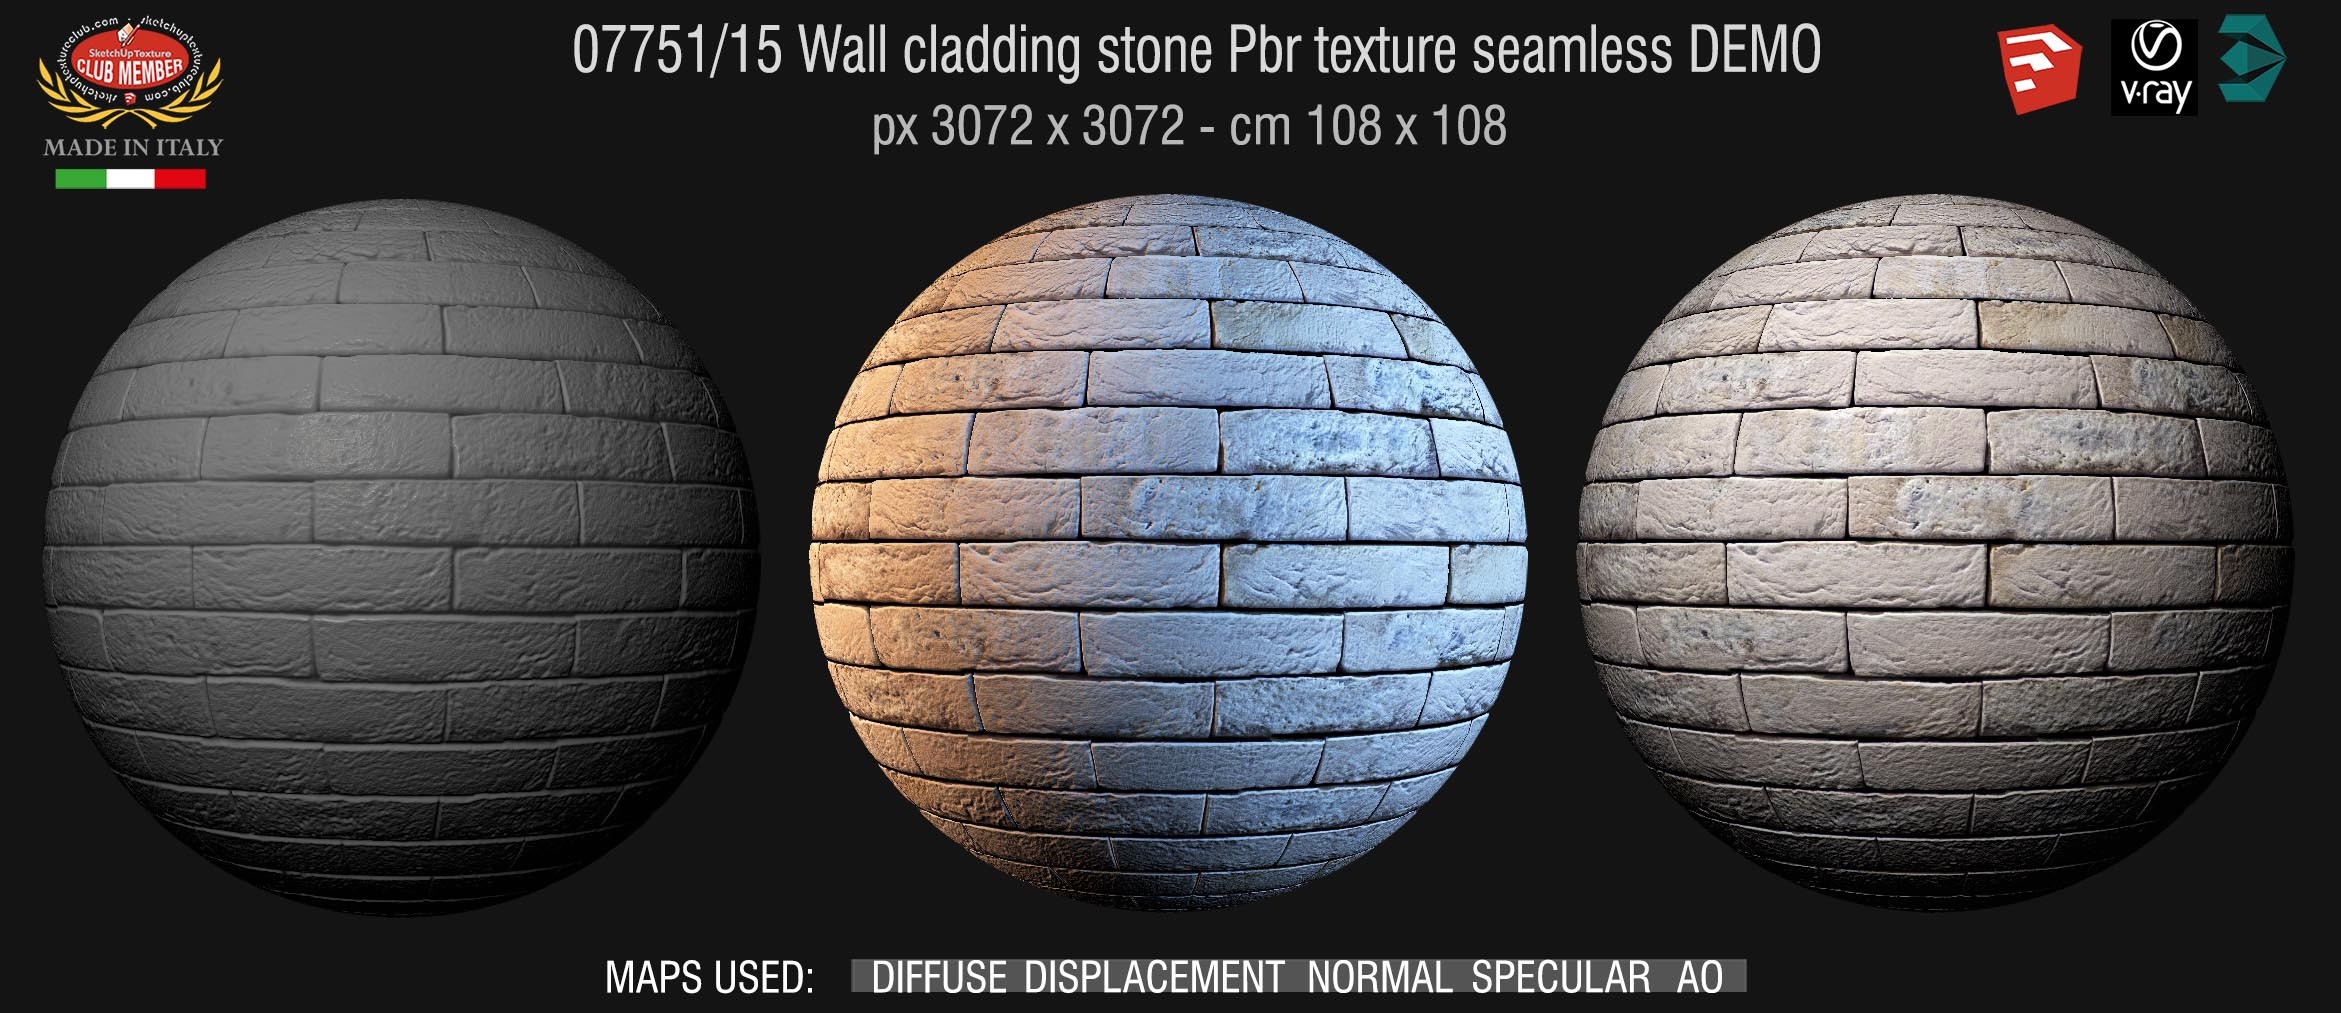 07751/15 Wall cladding stone pbr texture seamless demo